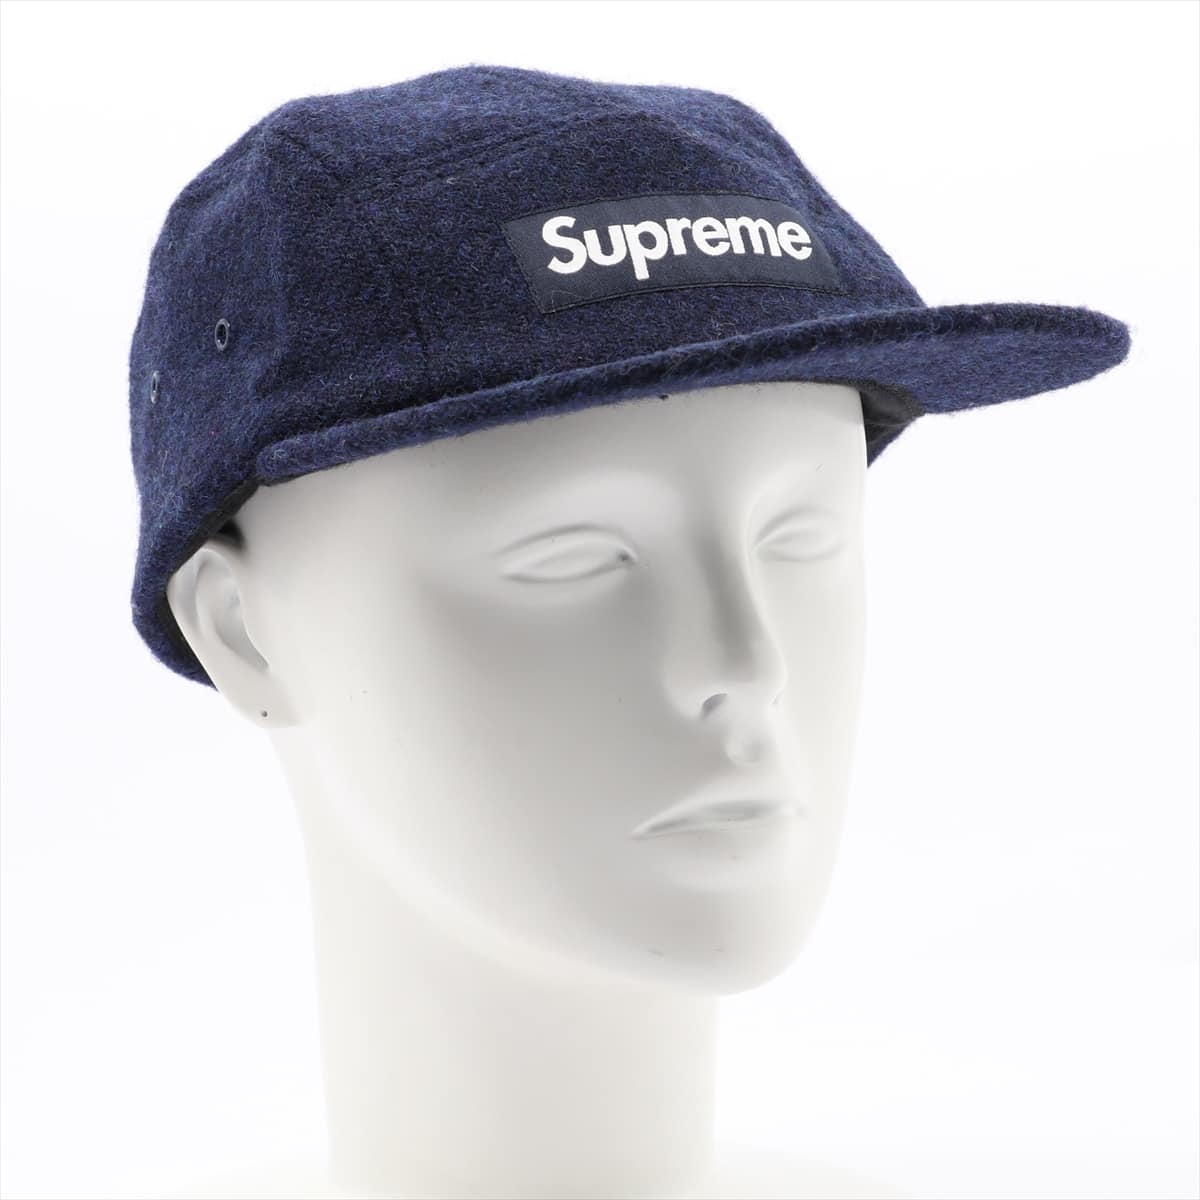 Supreme Box logo Cap Wool Navy blue Harris tweed